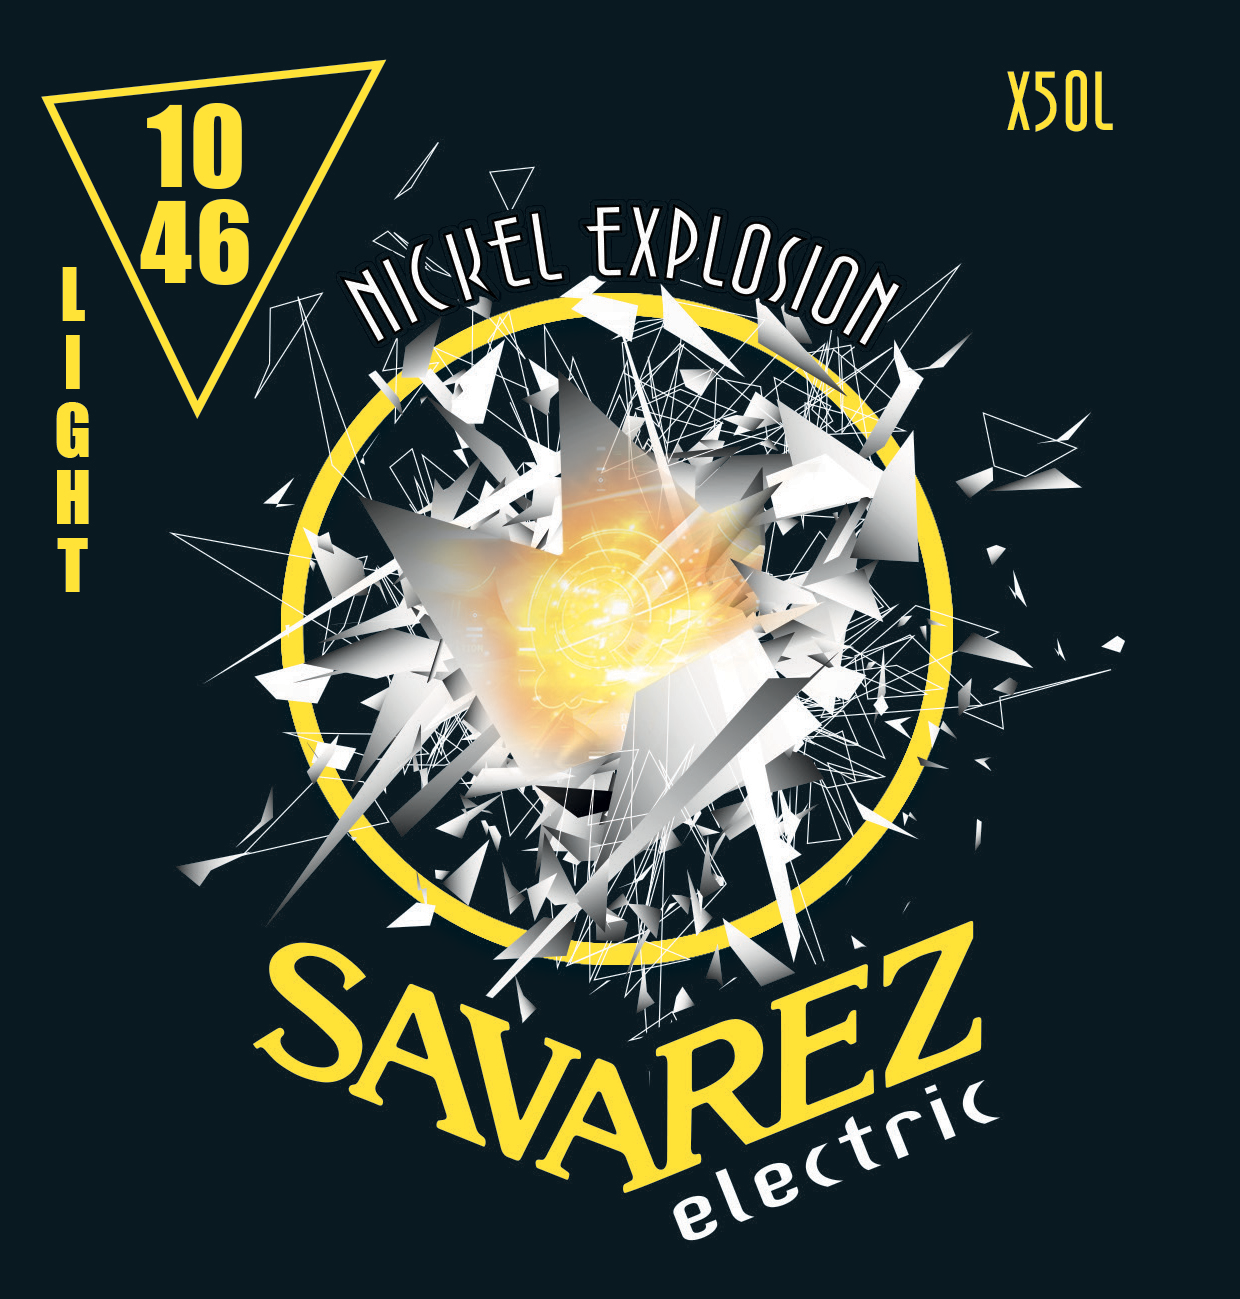 SAVAREZ ELECTRIC NICKEL EXPLOSION X50L